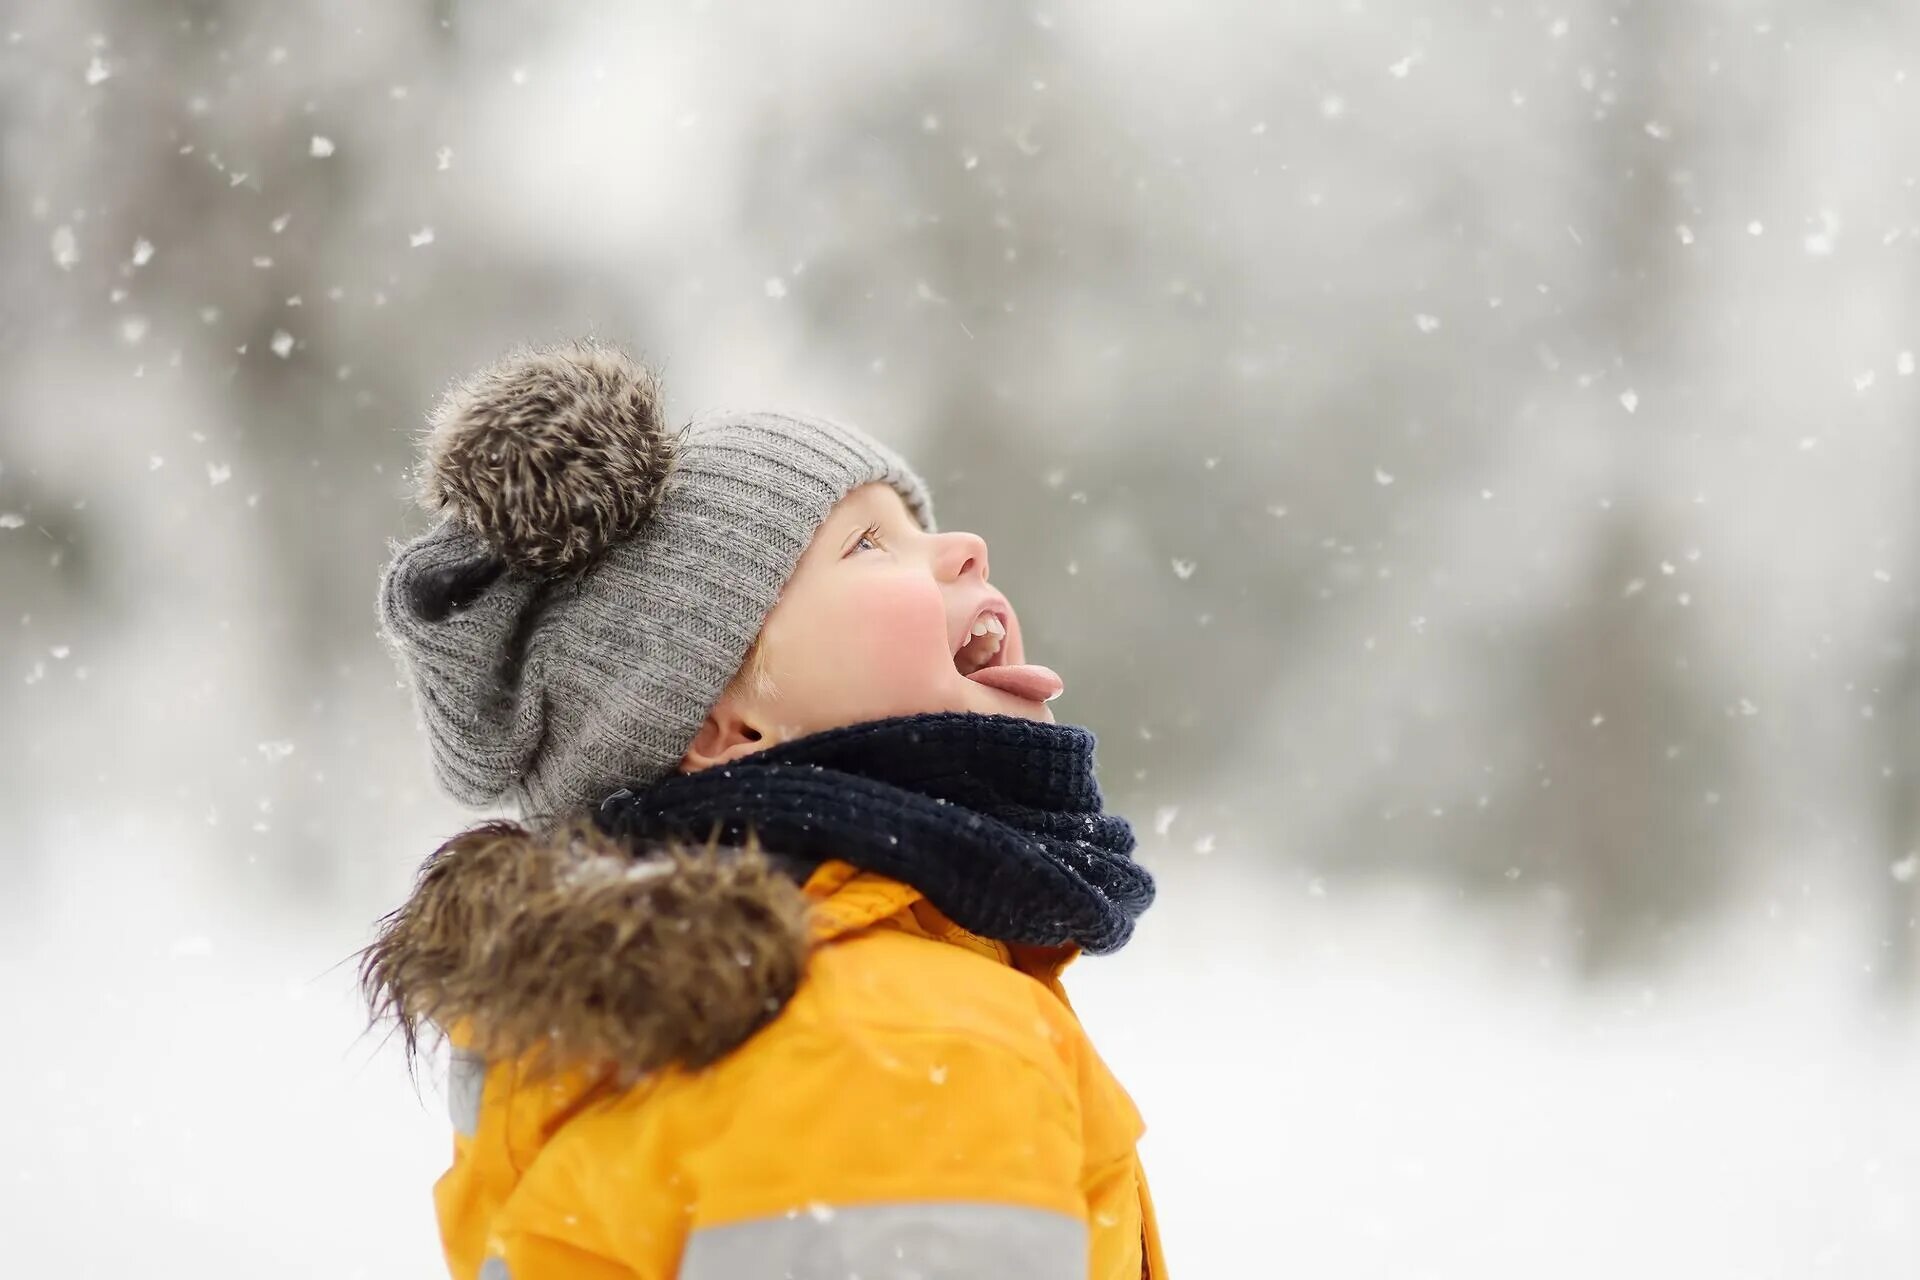 Ловить ртом воздух. Дети зимой. Ловить снежинки. Ребенок ловит снежинки. Ребенок ловит ртом снежинки.